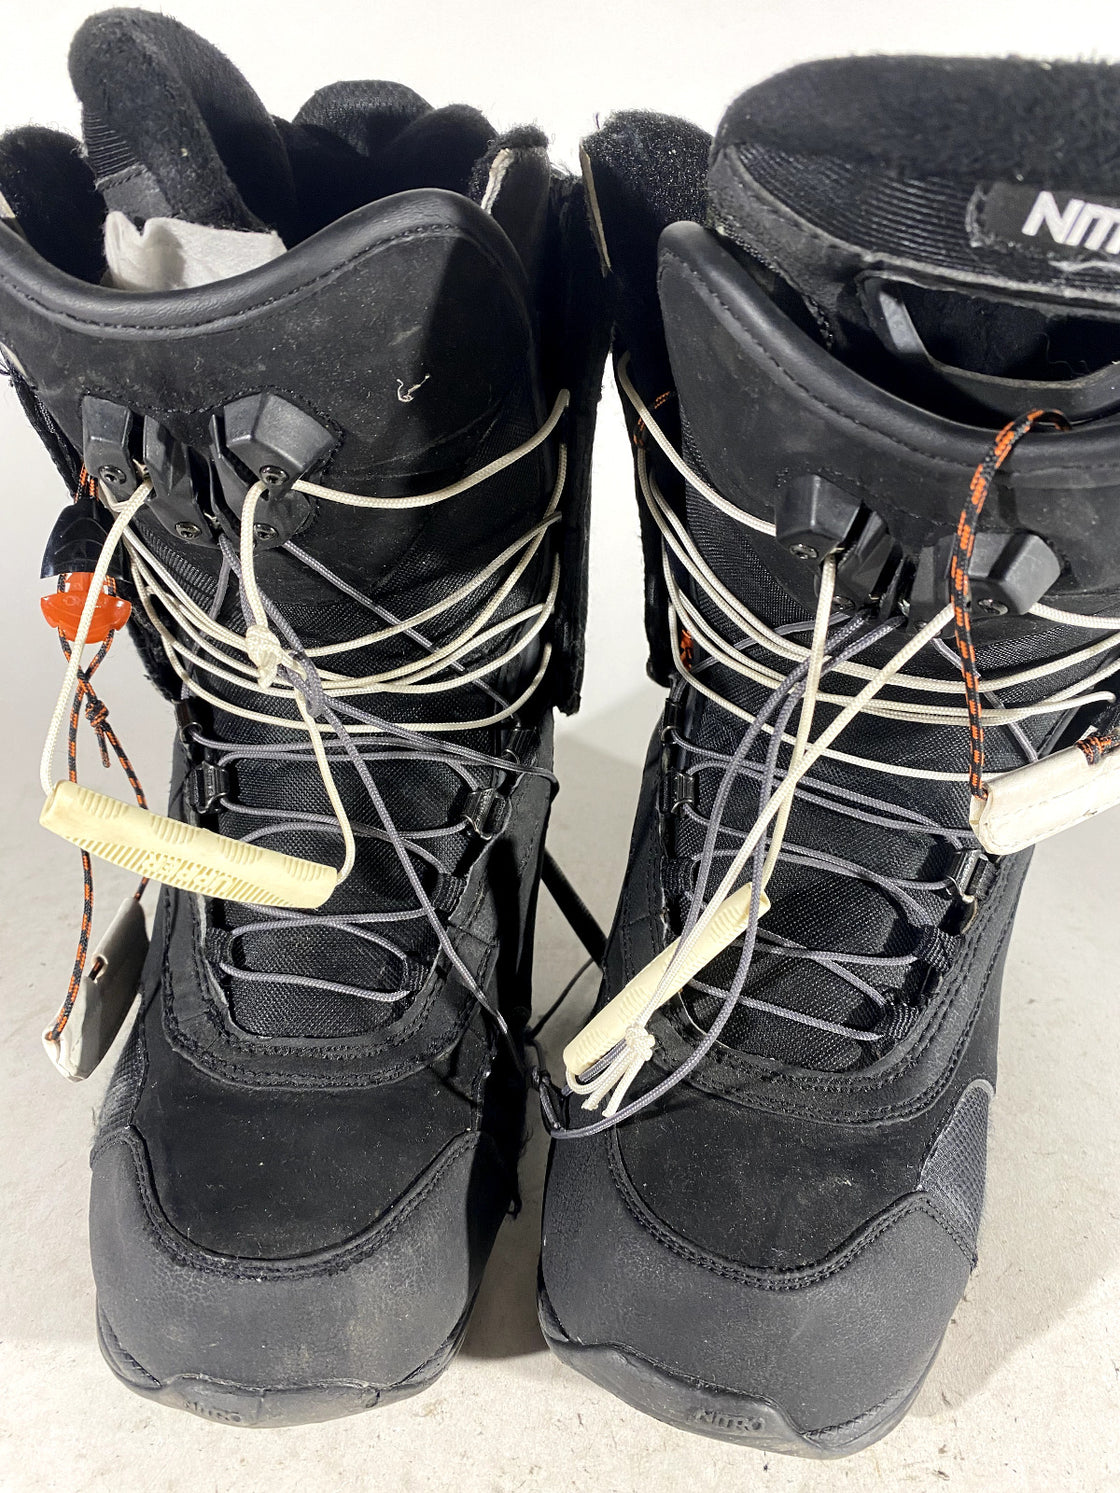 NITRO Snowboard Boots Ladies Size EU40.5 US8.5 UK7 Mondo 250 m